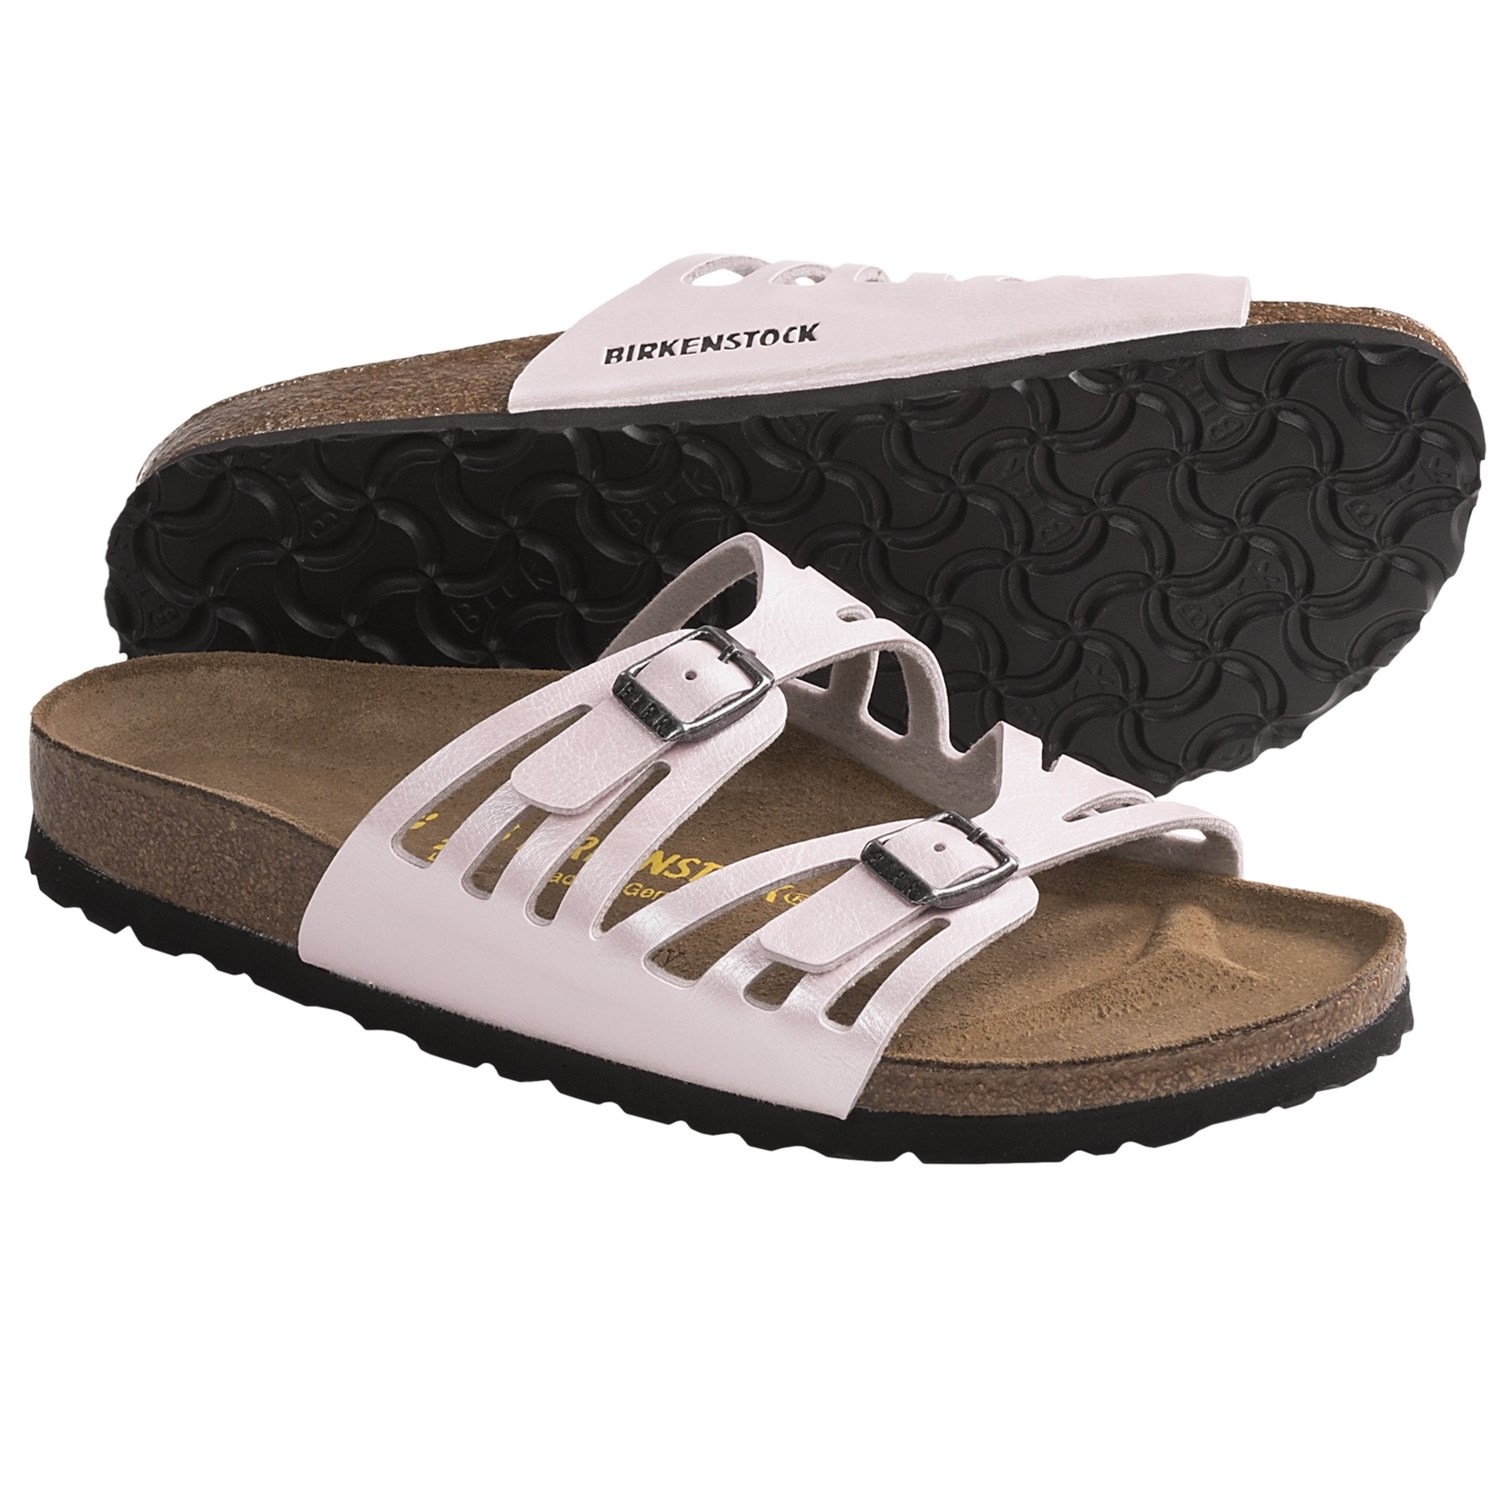 birkenstock sandals qvc